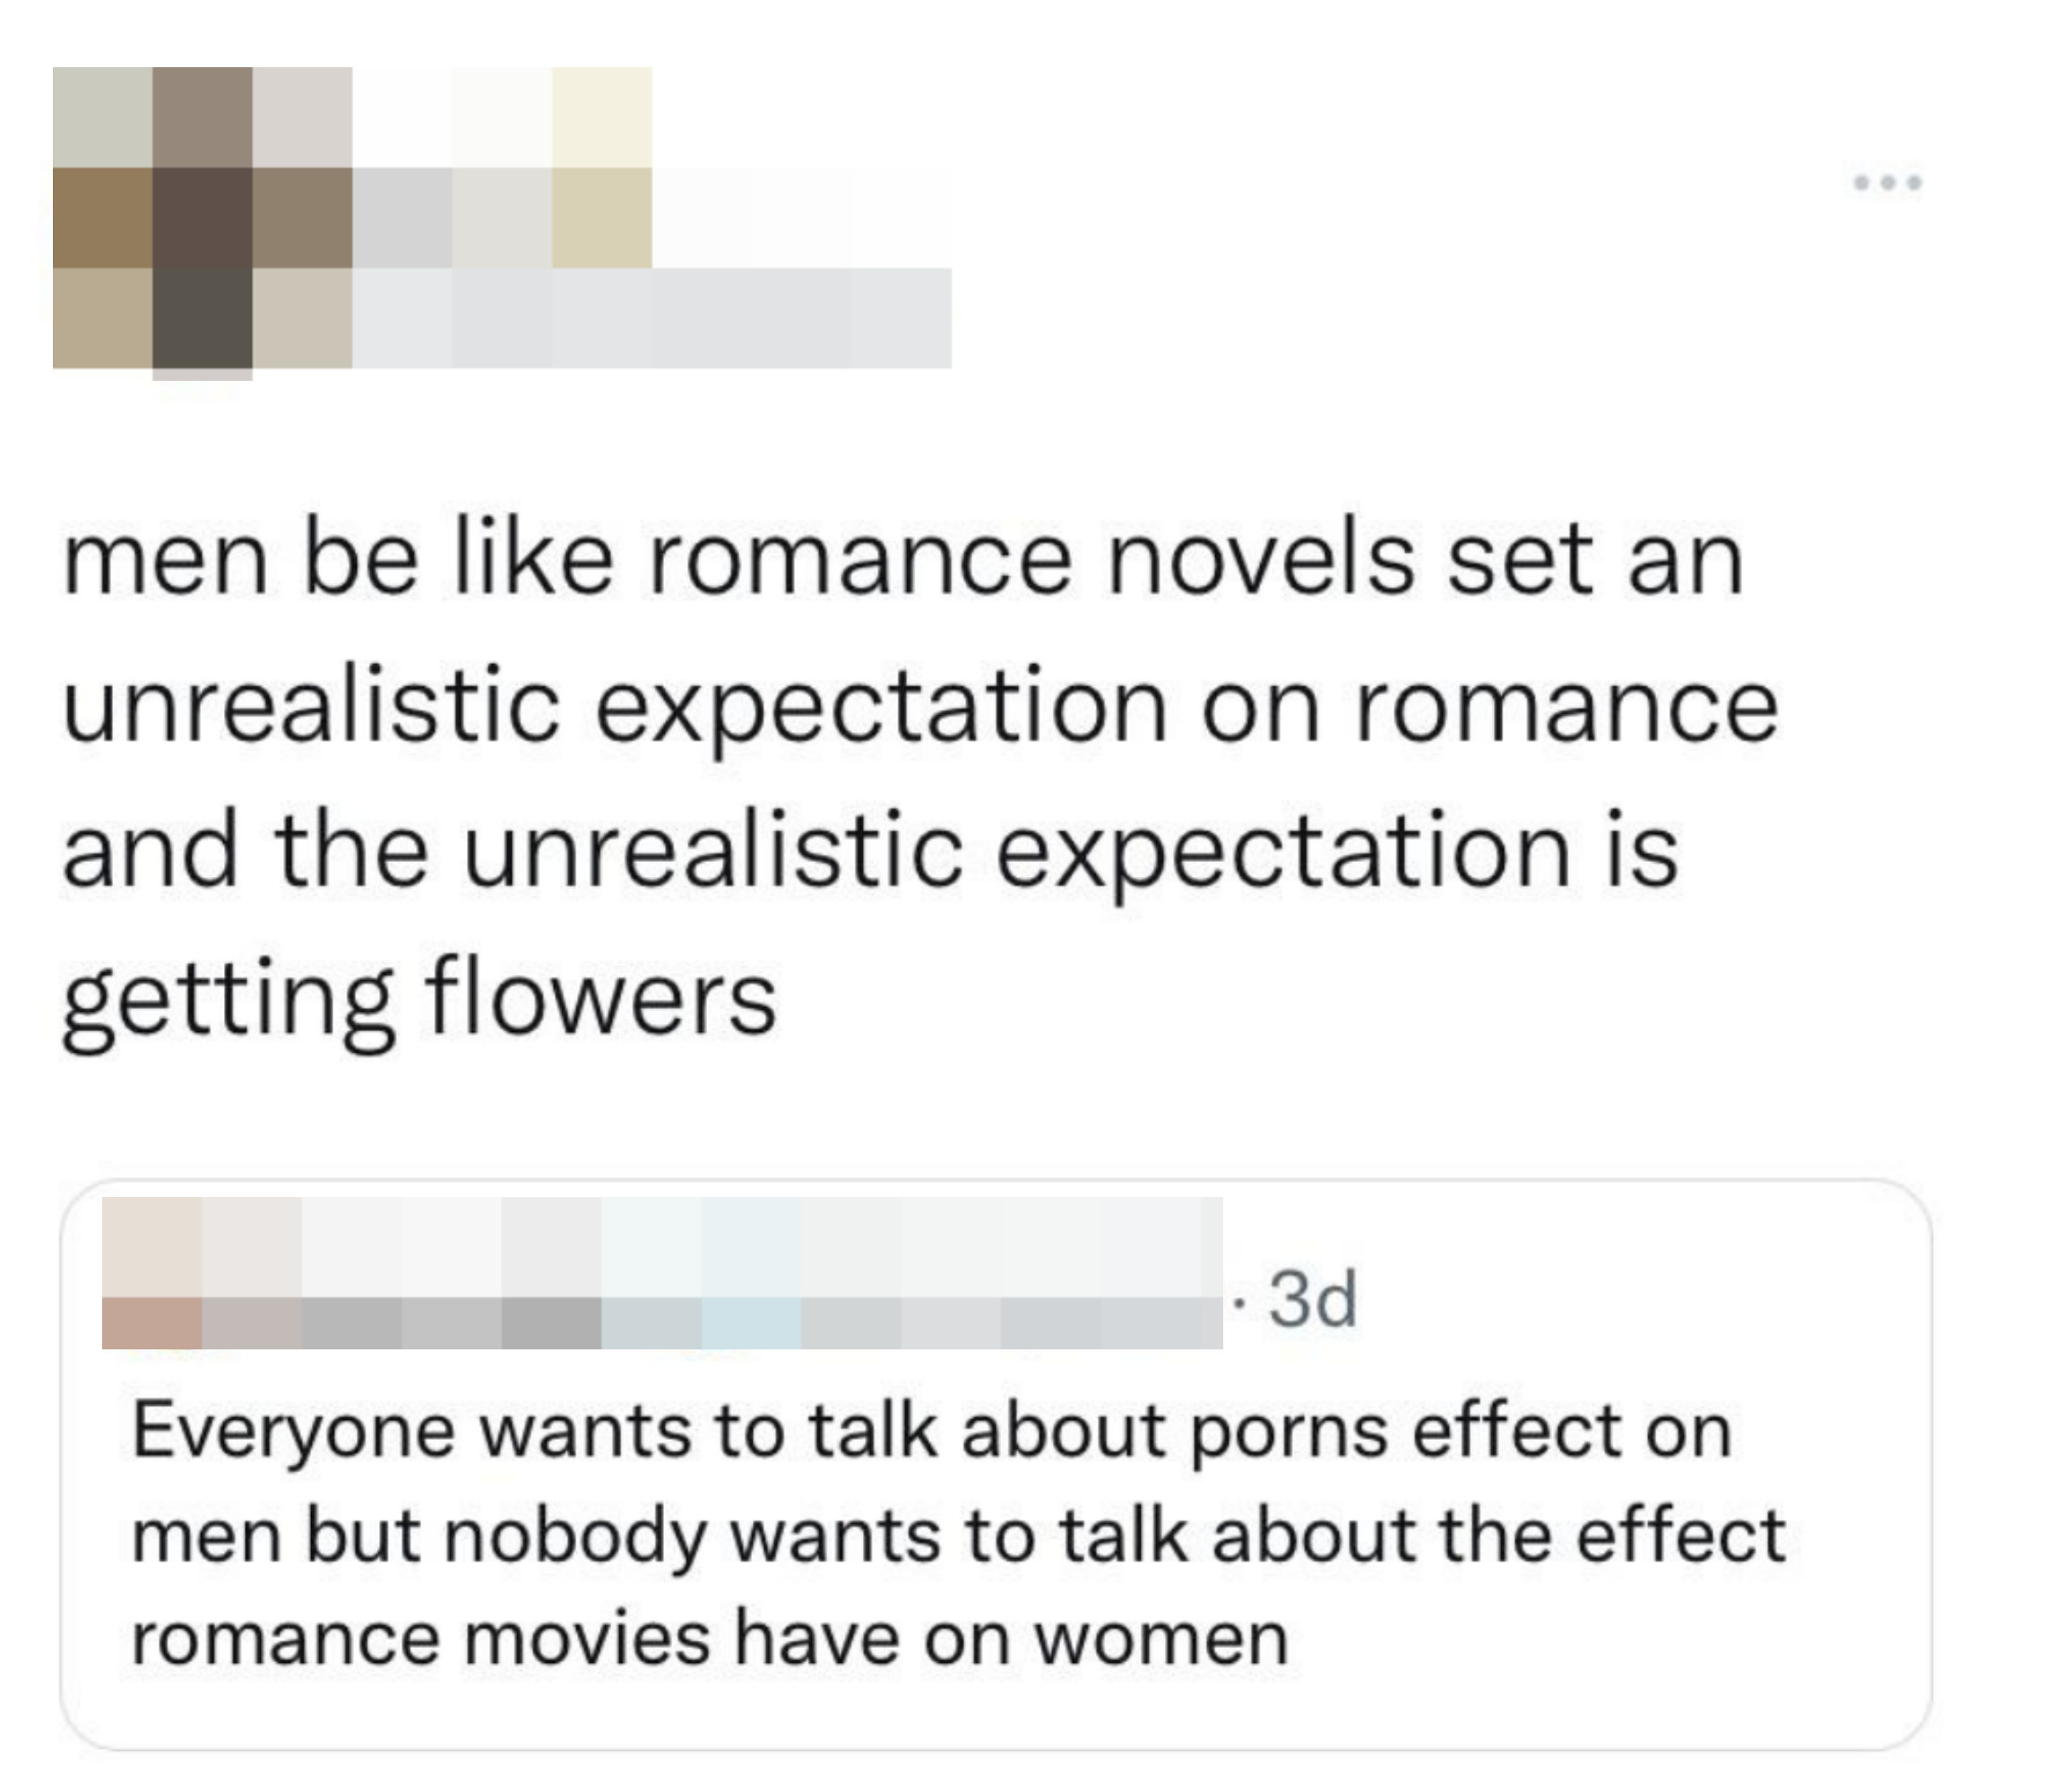 men be like, romance novels set an unrealistic expectation on romance and the unrealistic expectation is getting flowers